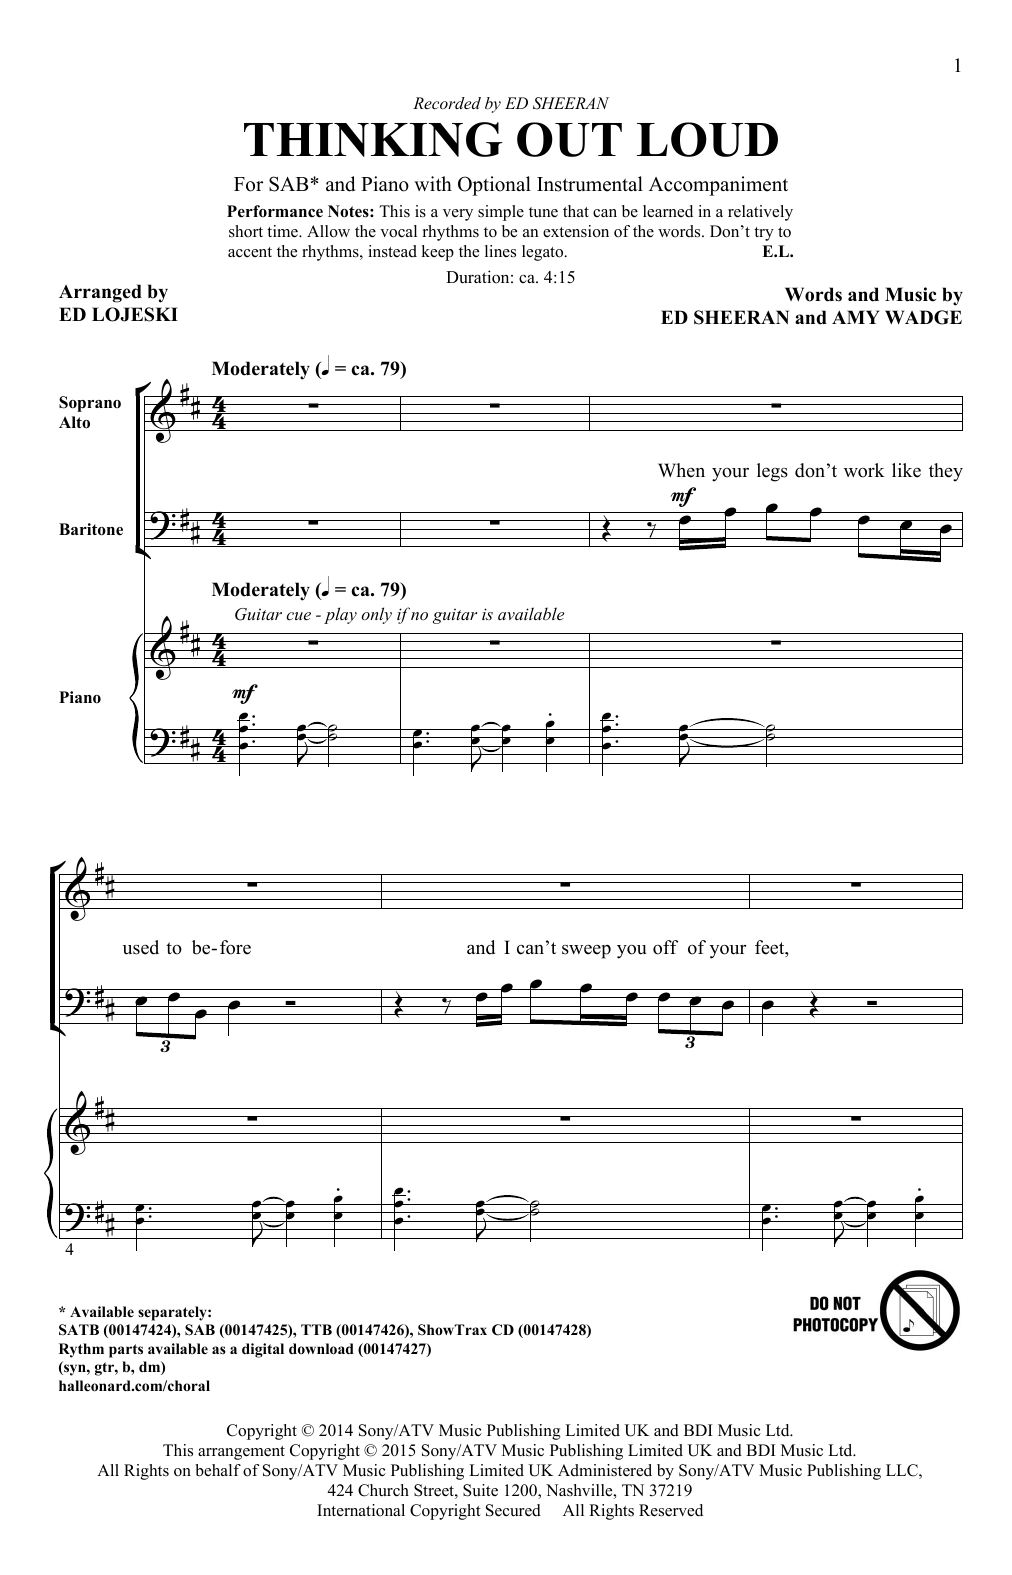 Ed Sheeran Thinking Out Loud (arr. Ed Lojeski) sheet music notes and chords arranged for SAB Choir